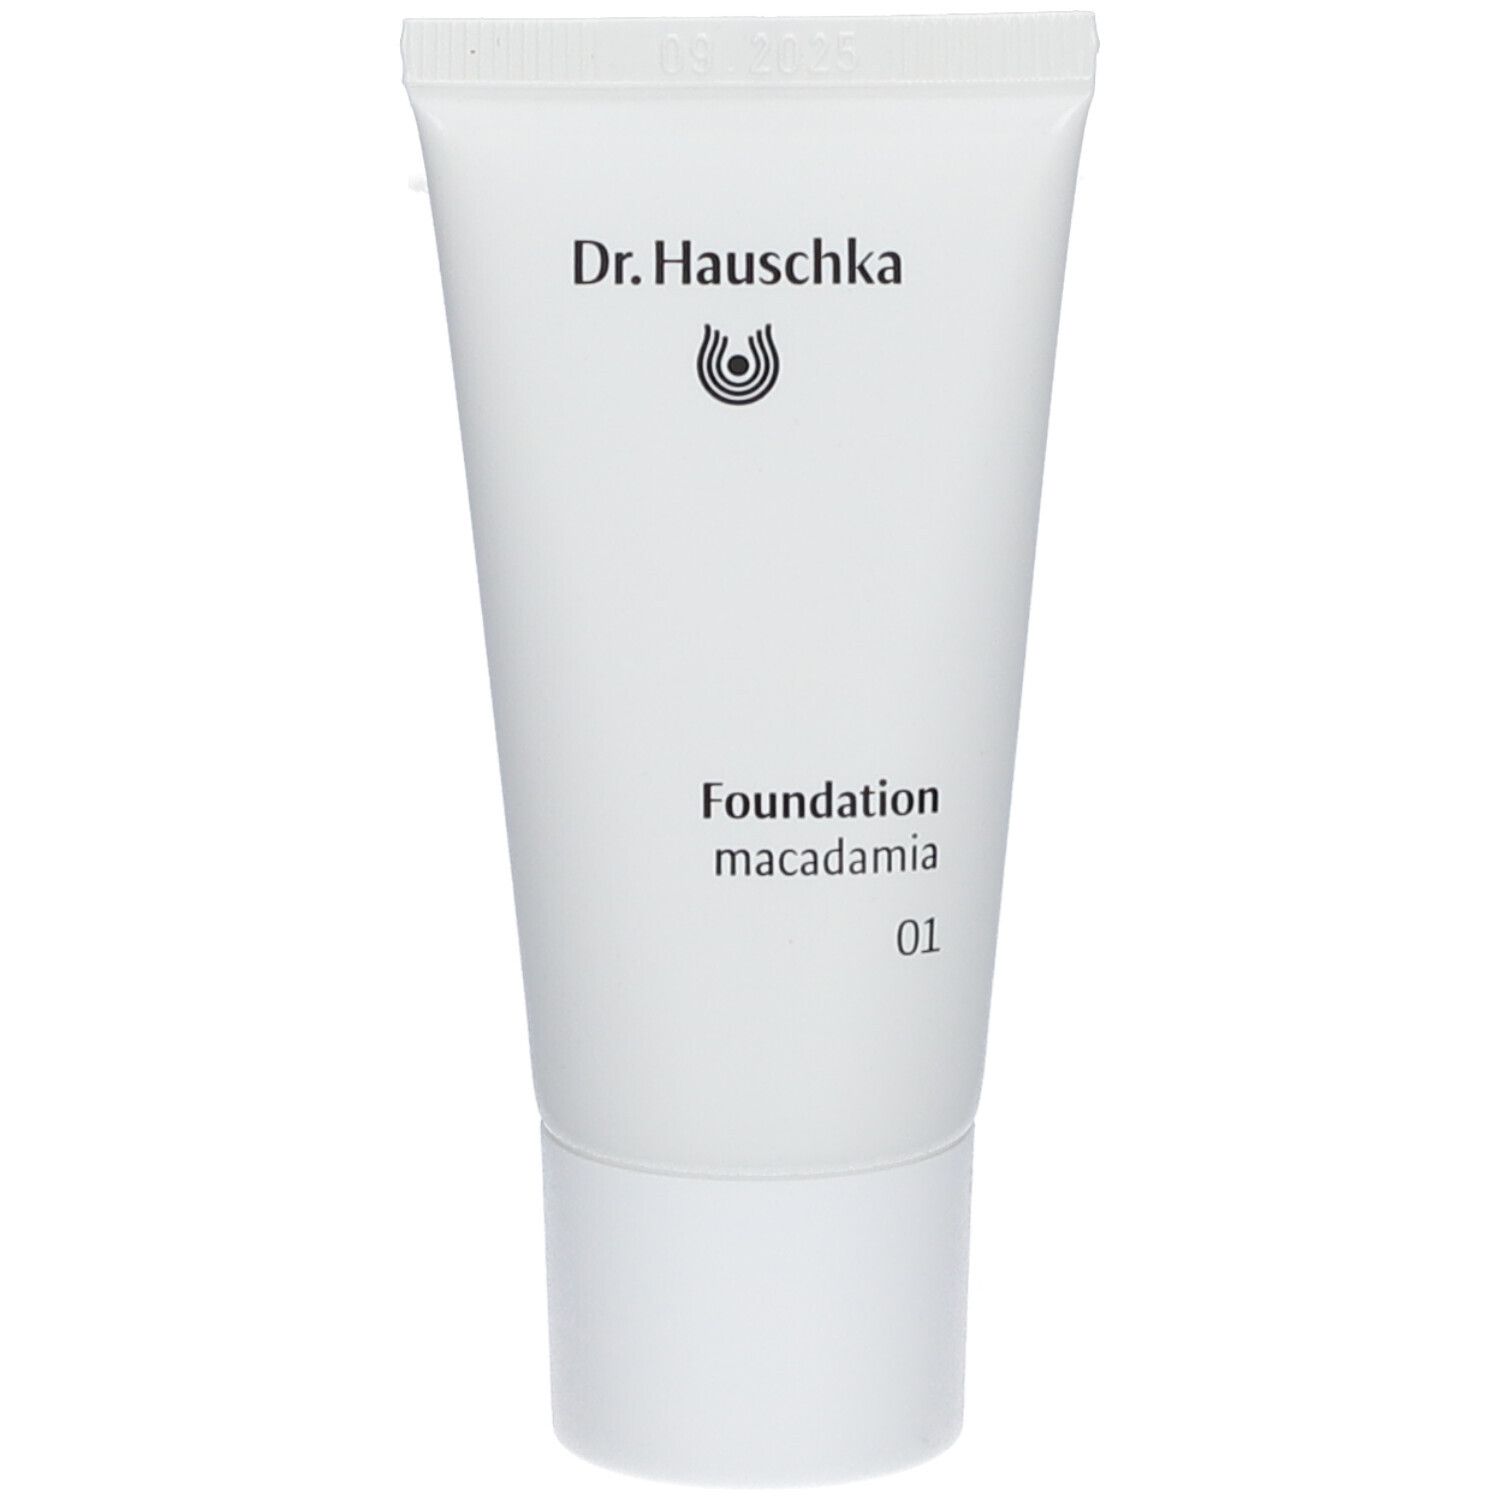 Dr. Hauschka Foundation 01 macadamia